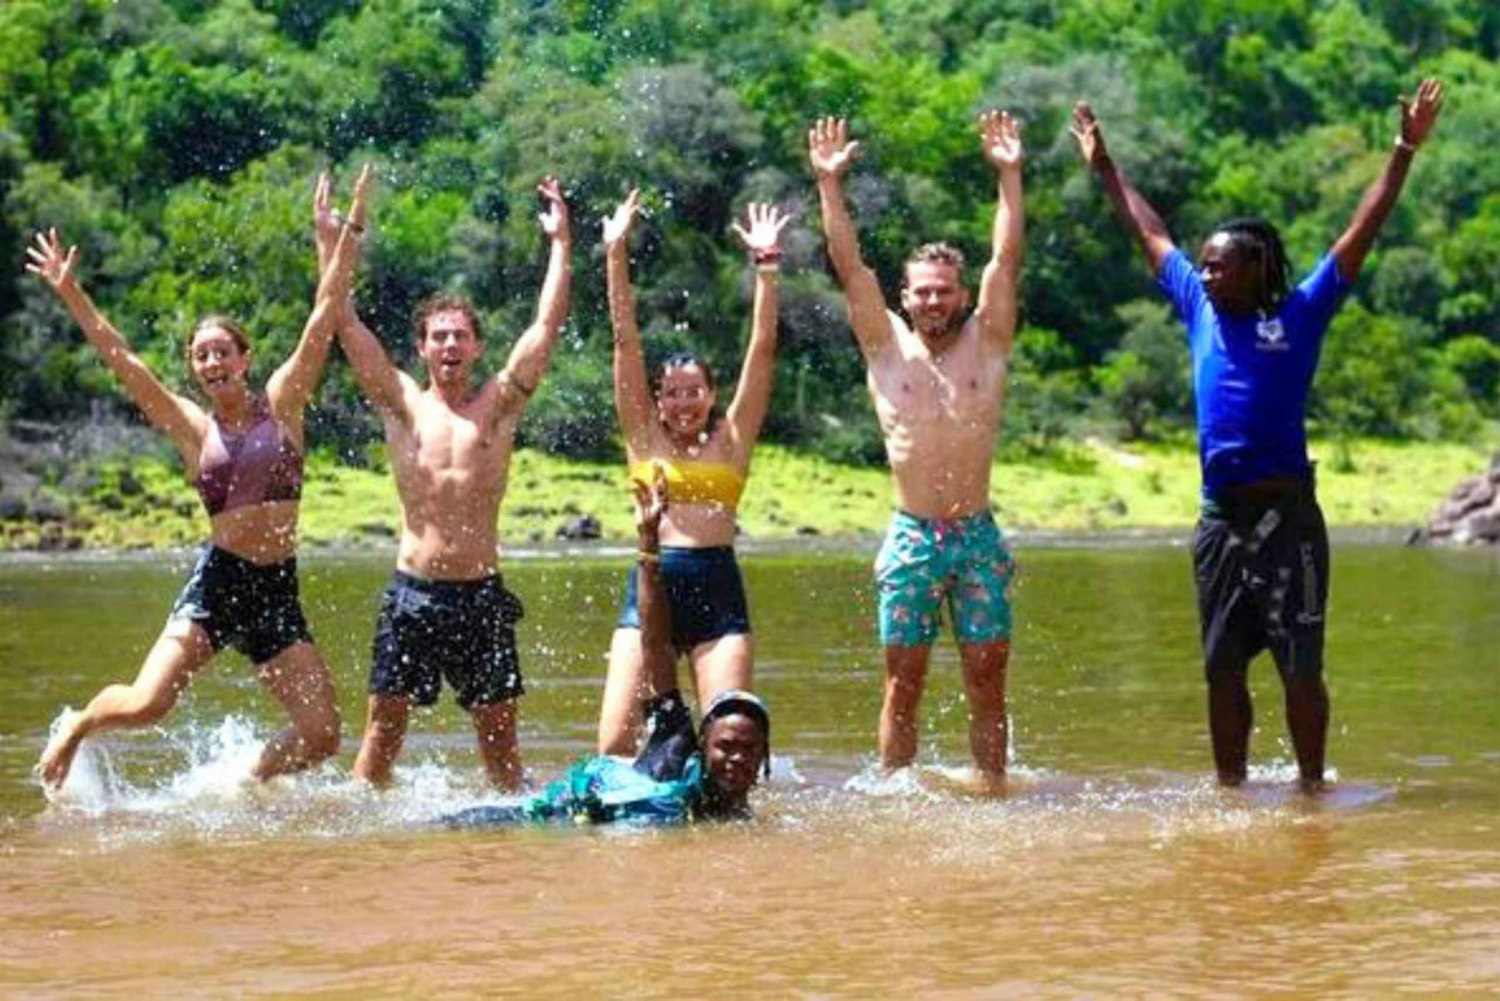 From Livingstone & Victoria Falls: Zambezi Half-Day Rafting